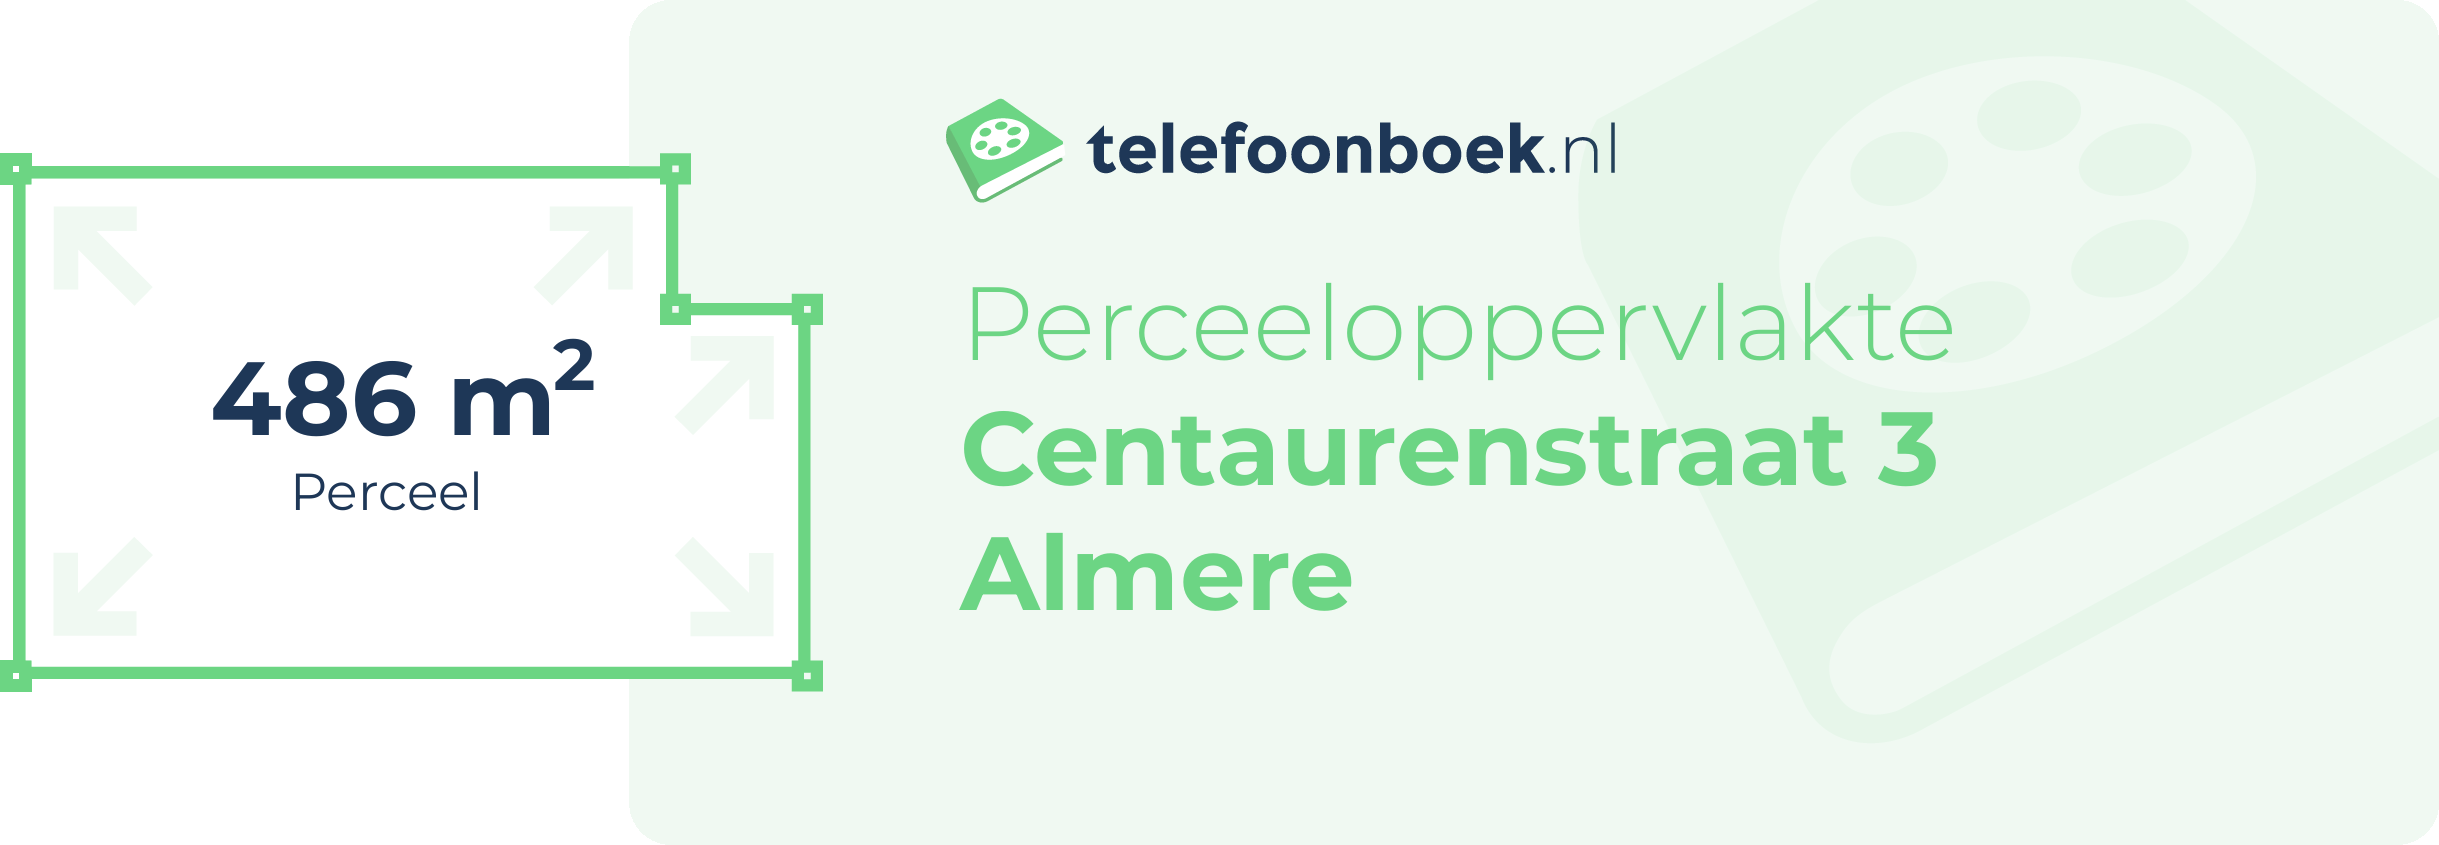 Perceeloppervlakte Centaurenstraat 3 Almere